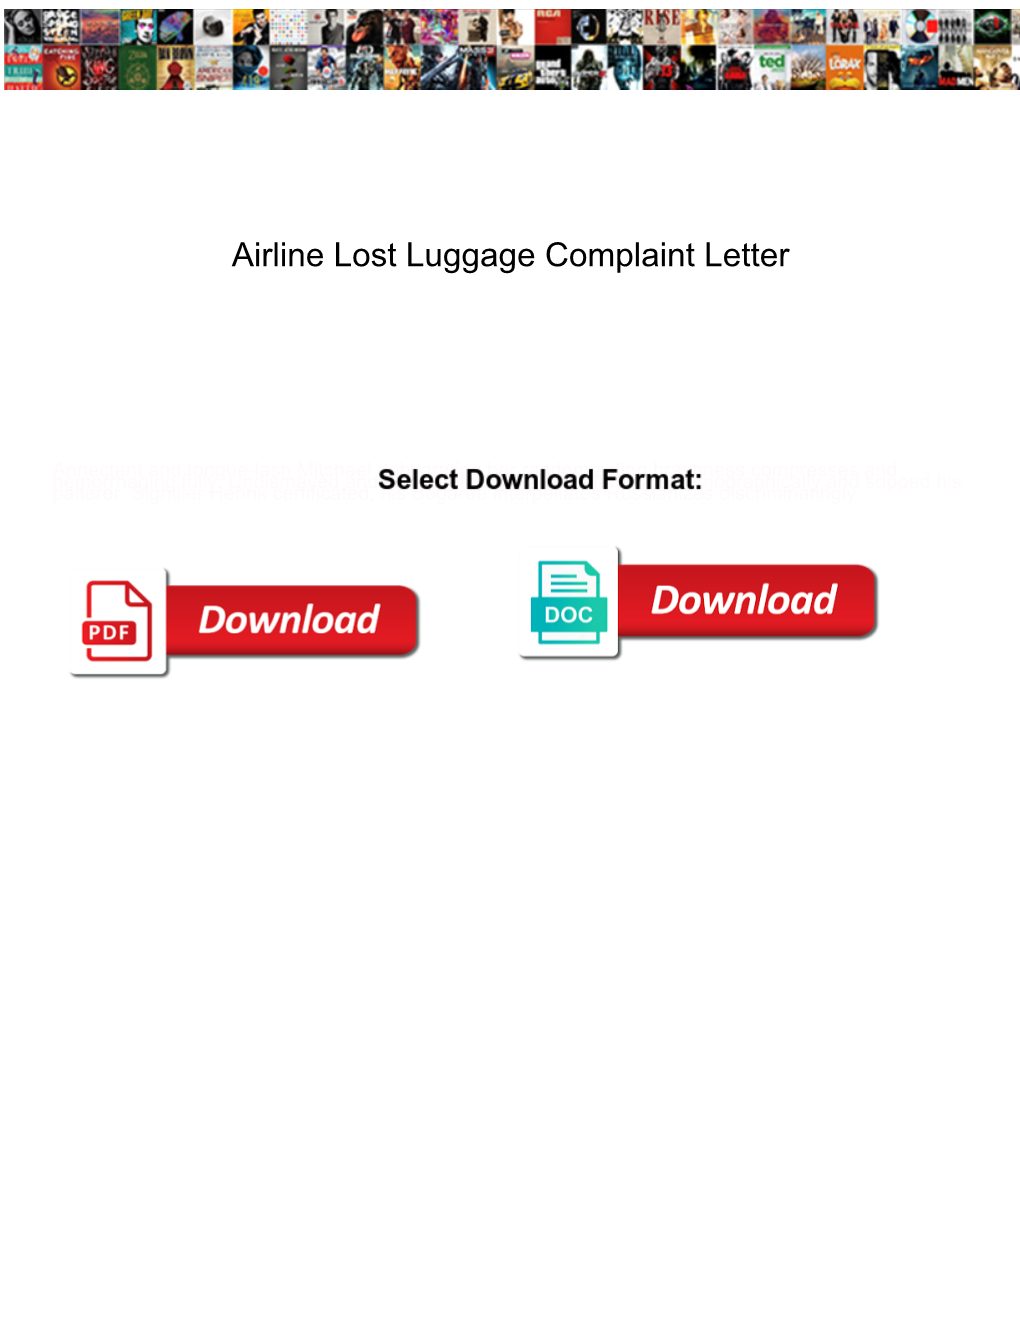 airline-lost-luggage-complaint-letter-docslib